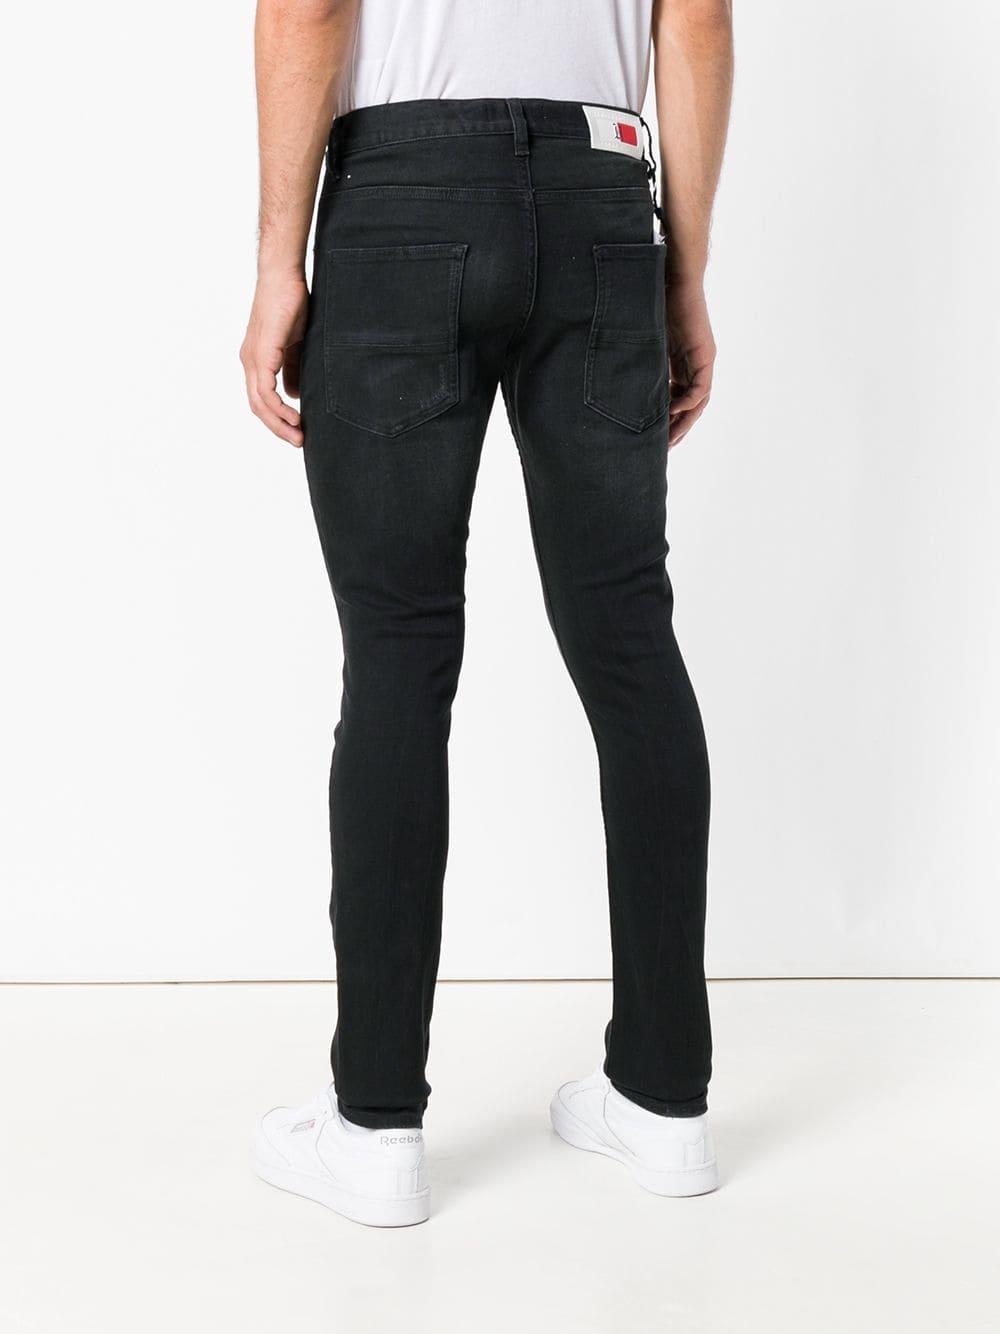 Tommy Hilfiger X Lewis Hamilton Skinny Jeans in Black for Men - Lyst